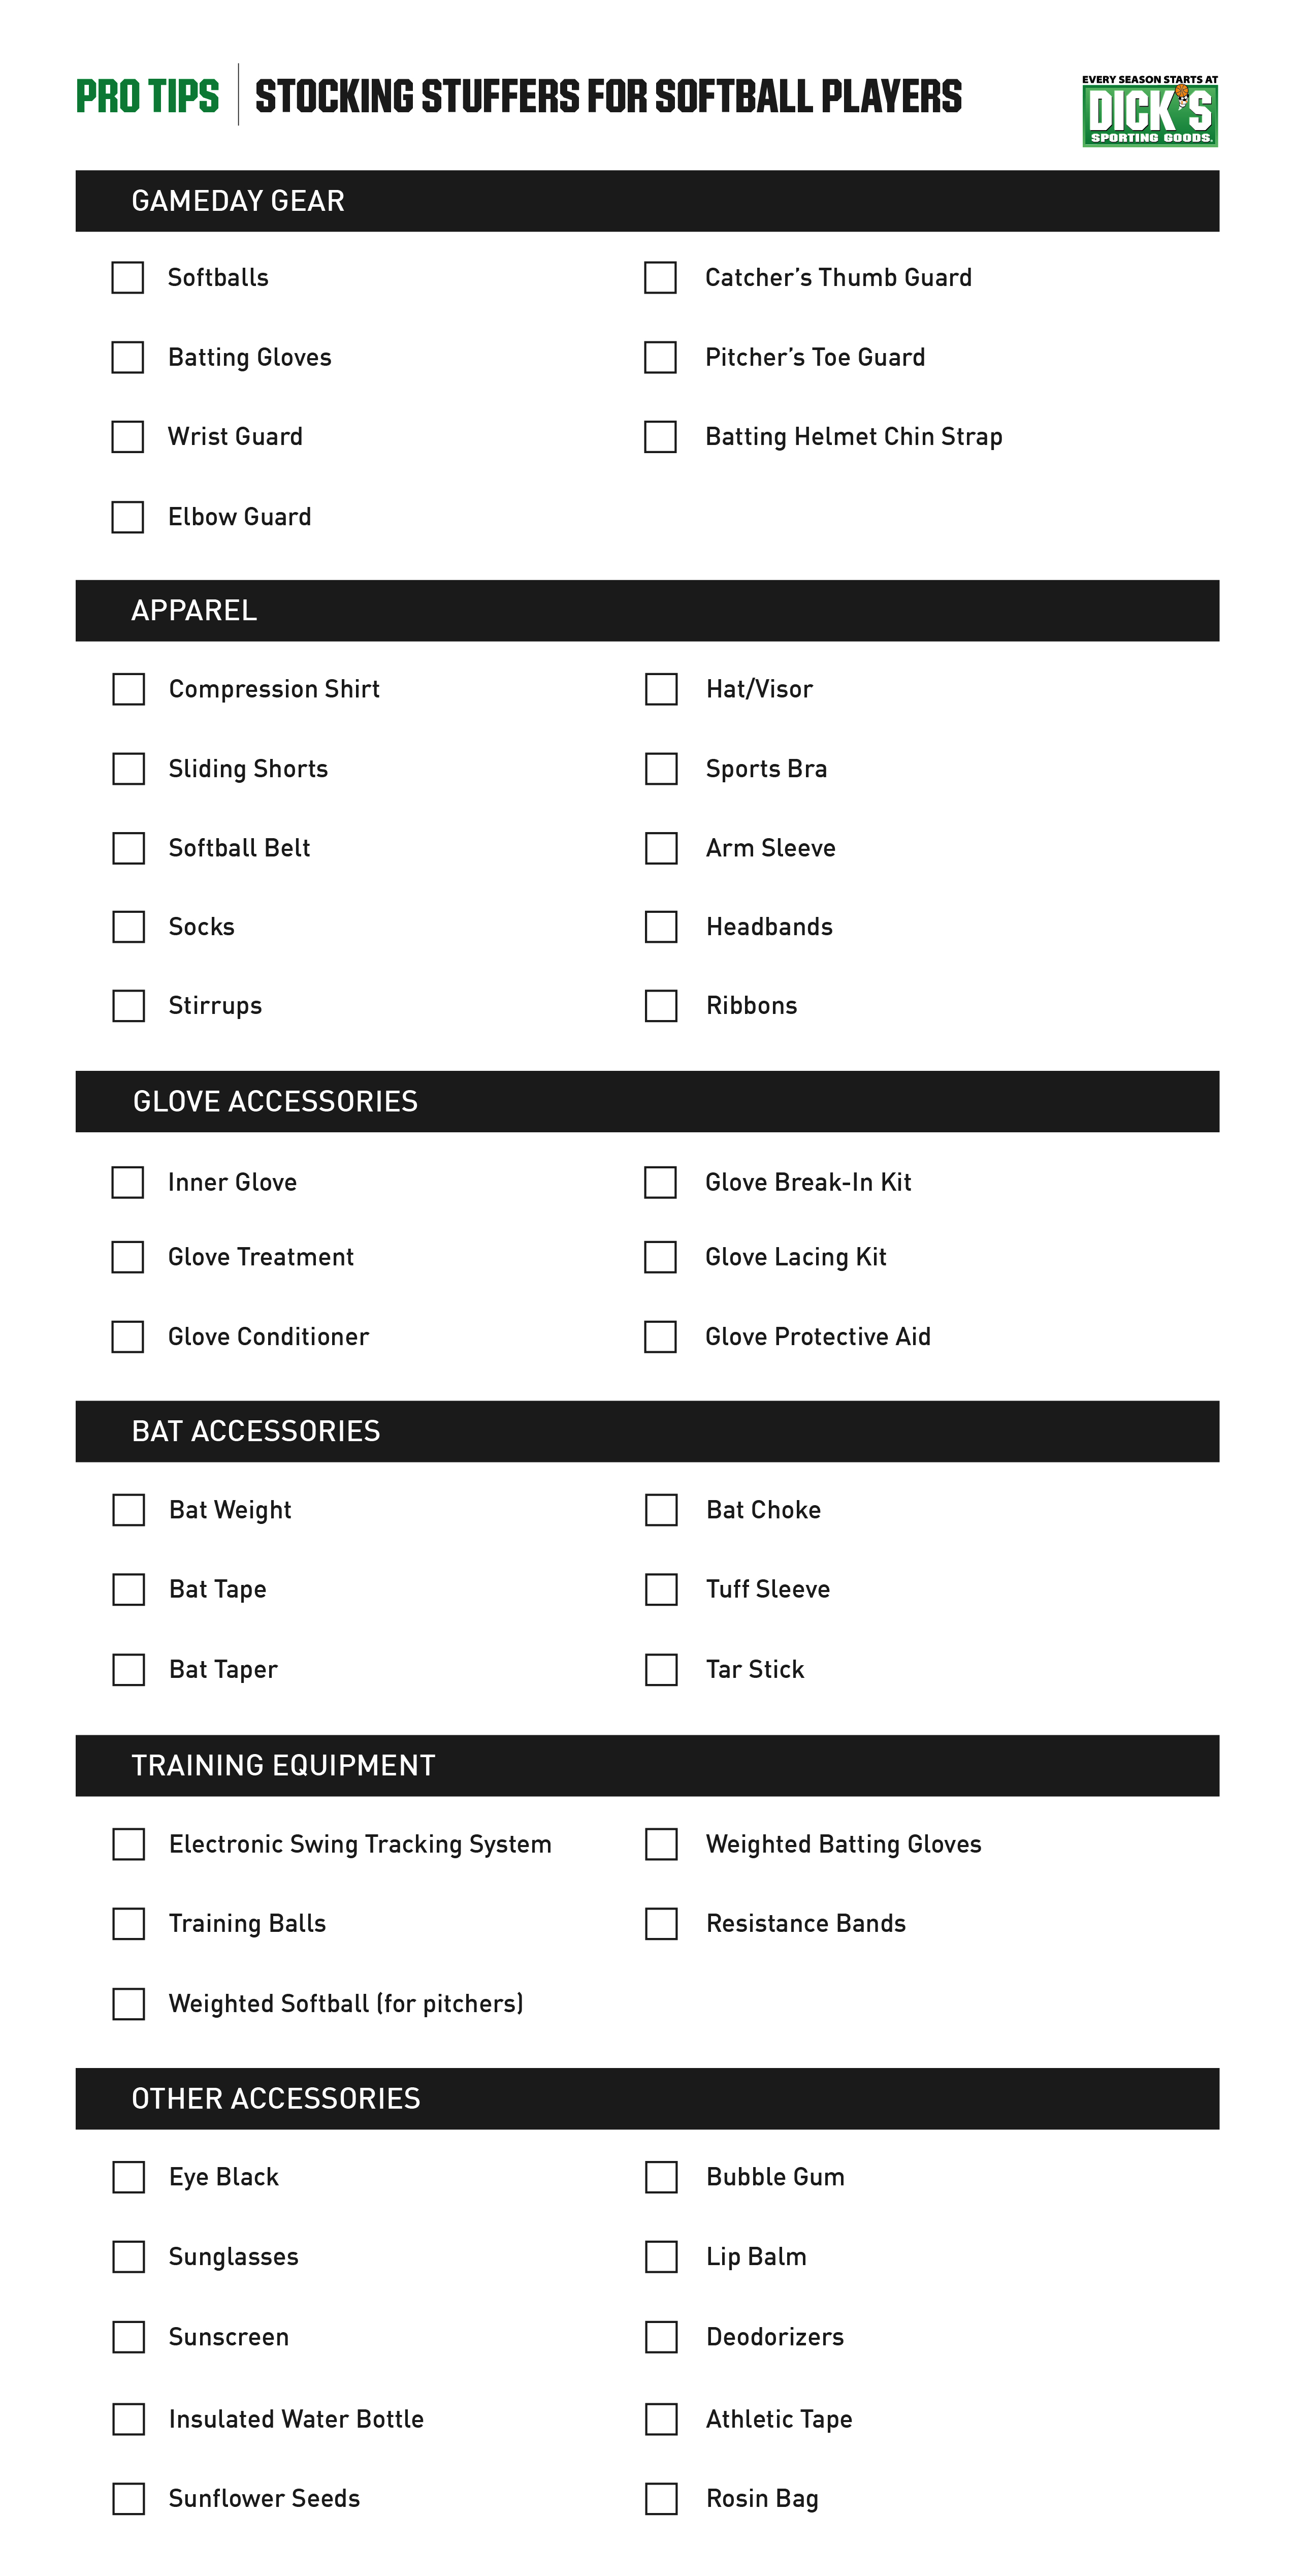 Stocking Stuffers for Softball Players Checklist